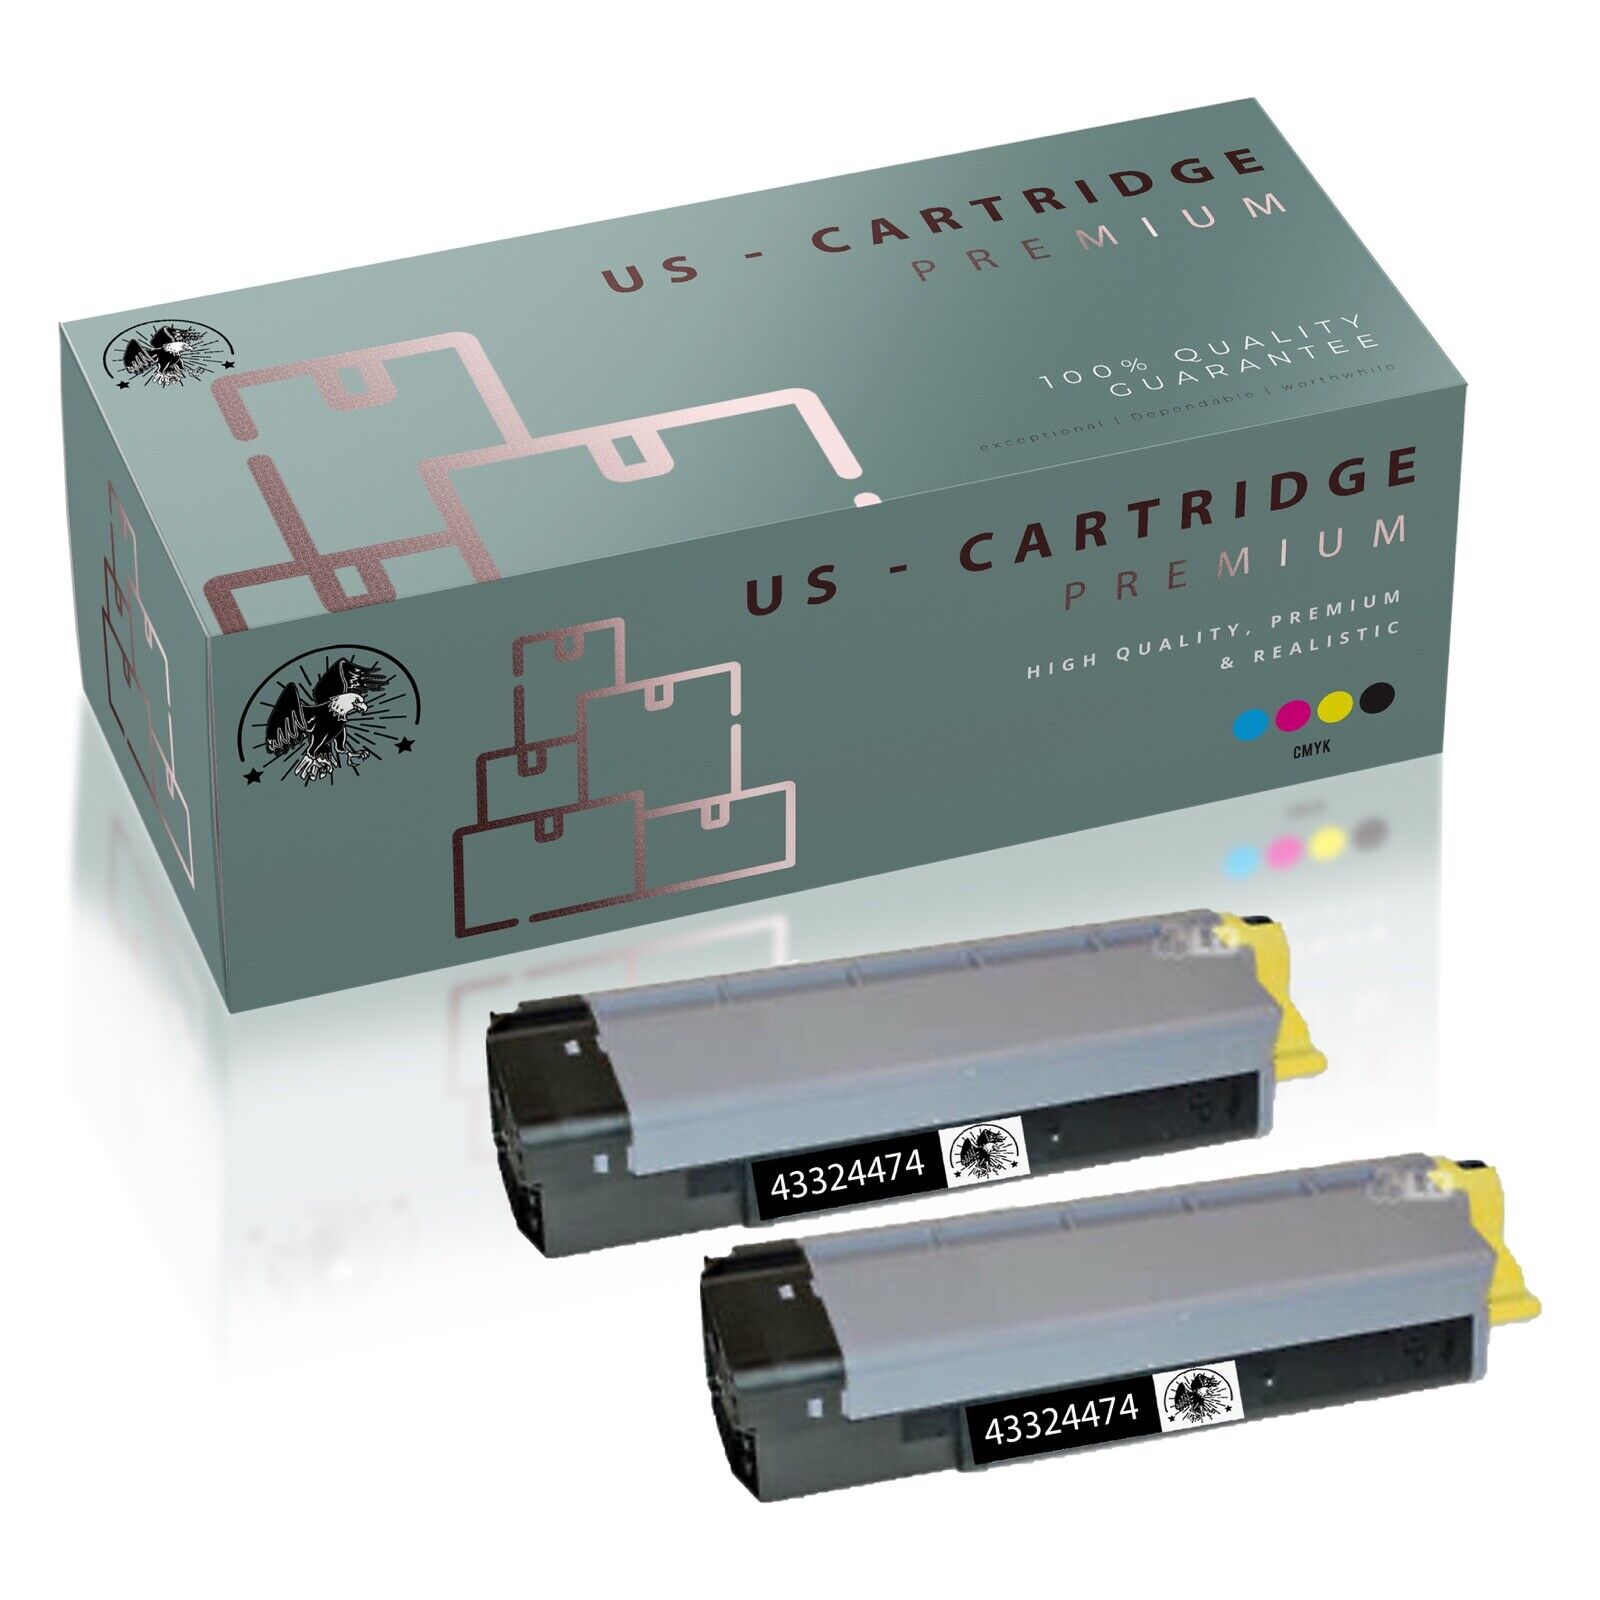 2PK 43324474 Yellow Toner Cartridge Compatible Okidata CX2032 MFP